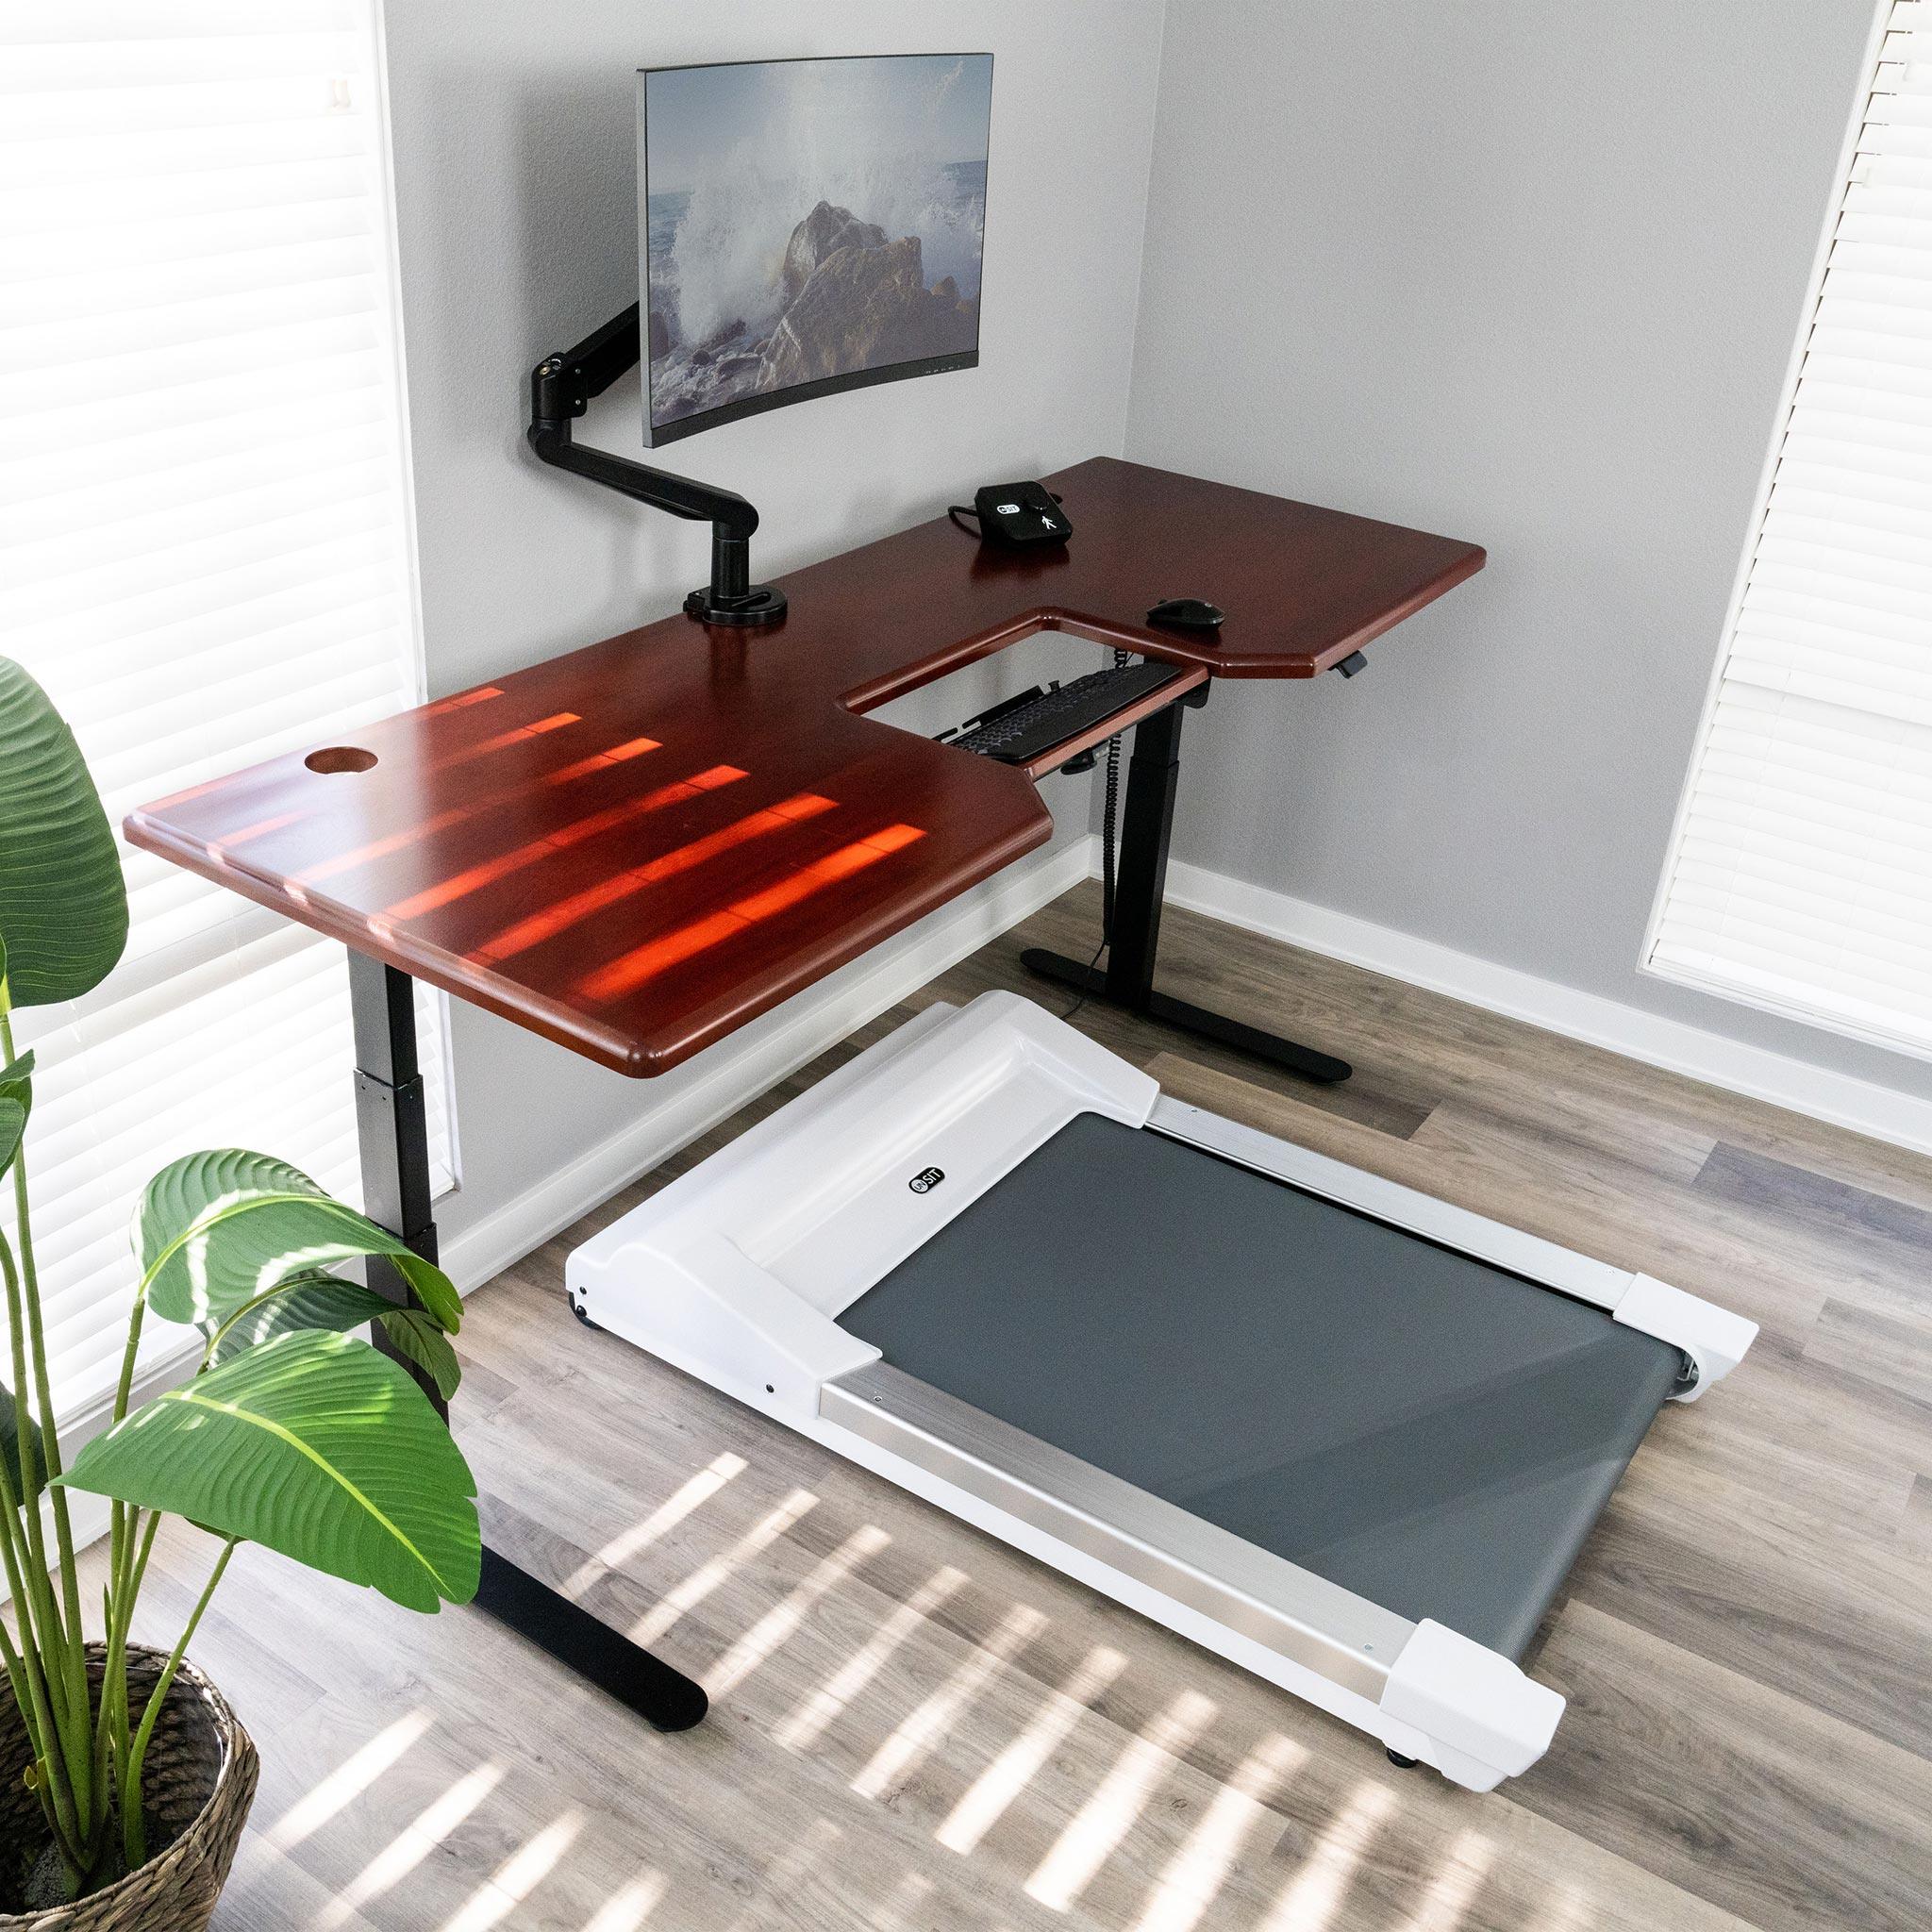 Unsit Desk Treadmill - iMovR